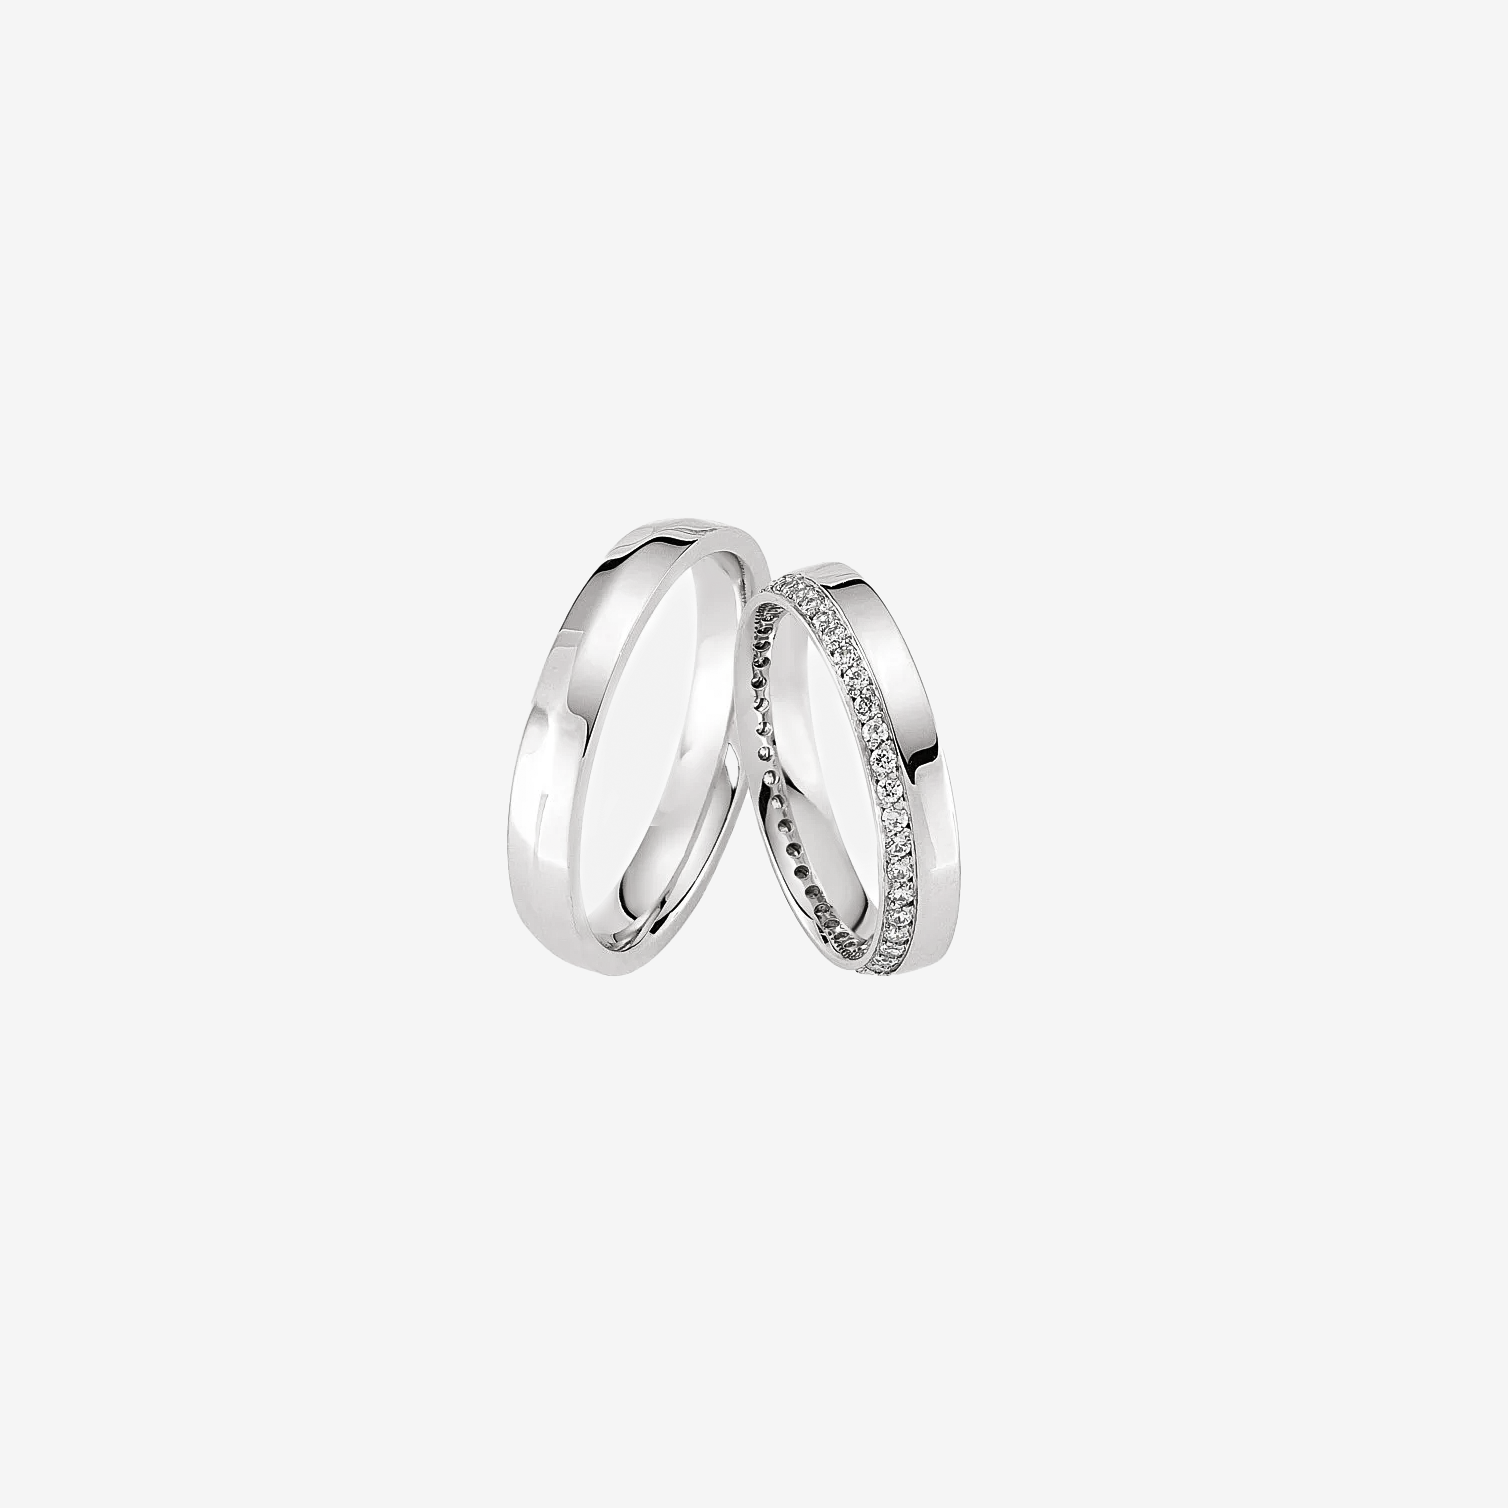 Jardin Diamond Wedding Rings - White Gold - Pair